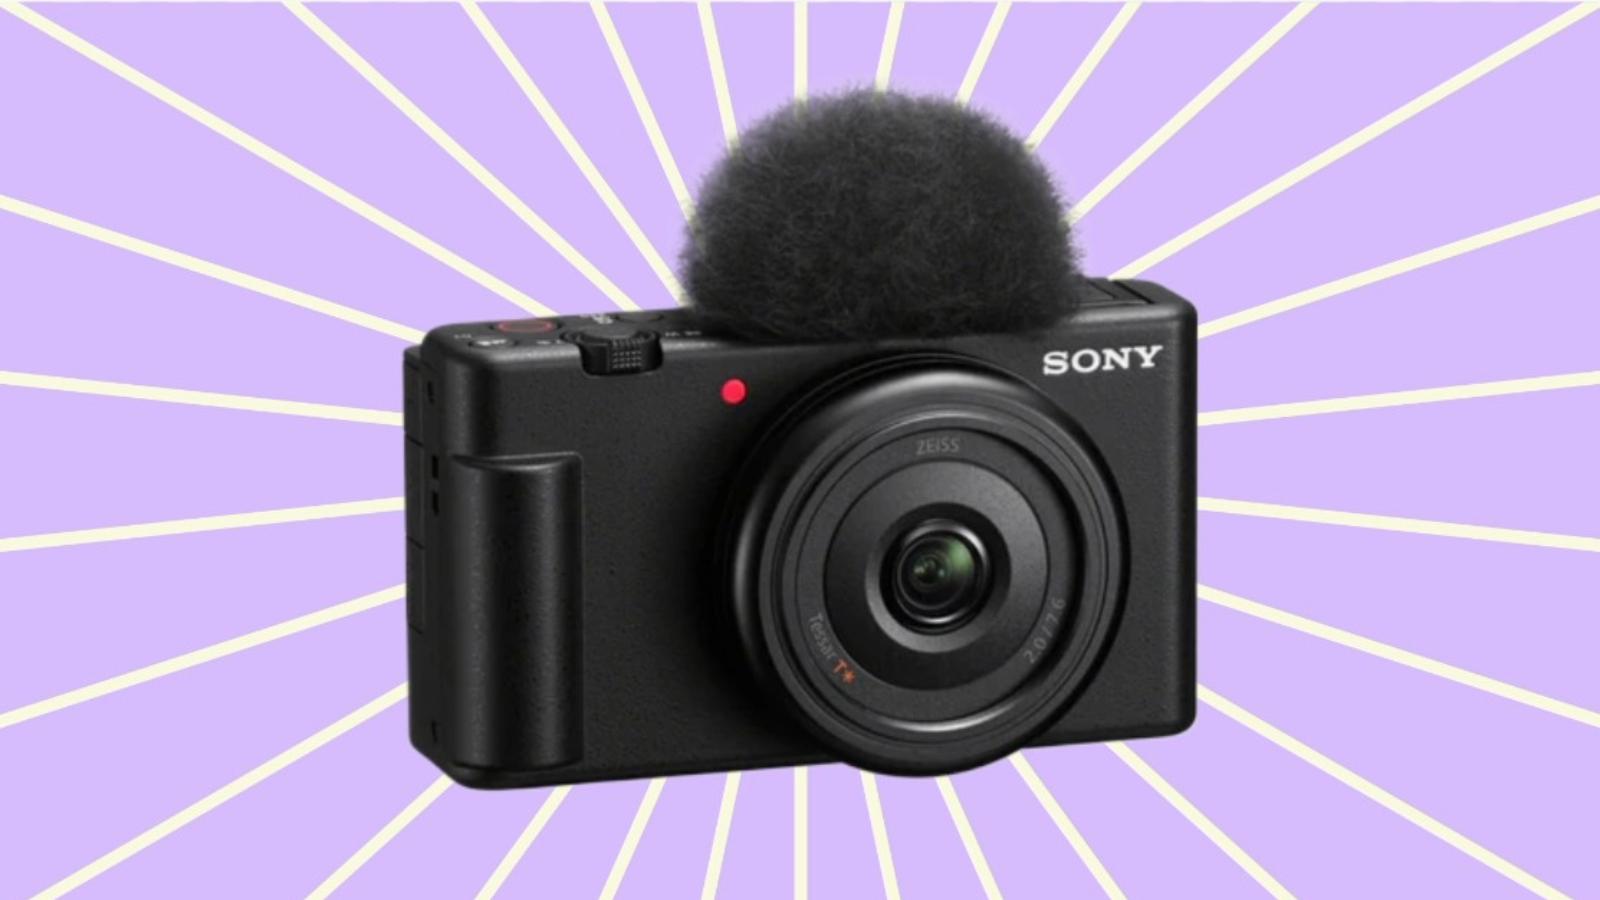 Sony ZV-1F vlogging camera against a cartoonish background